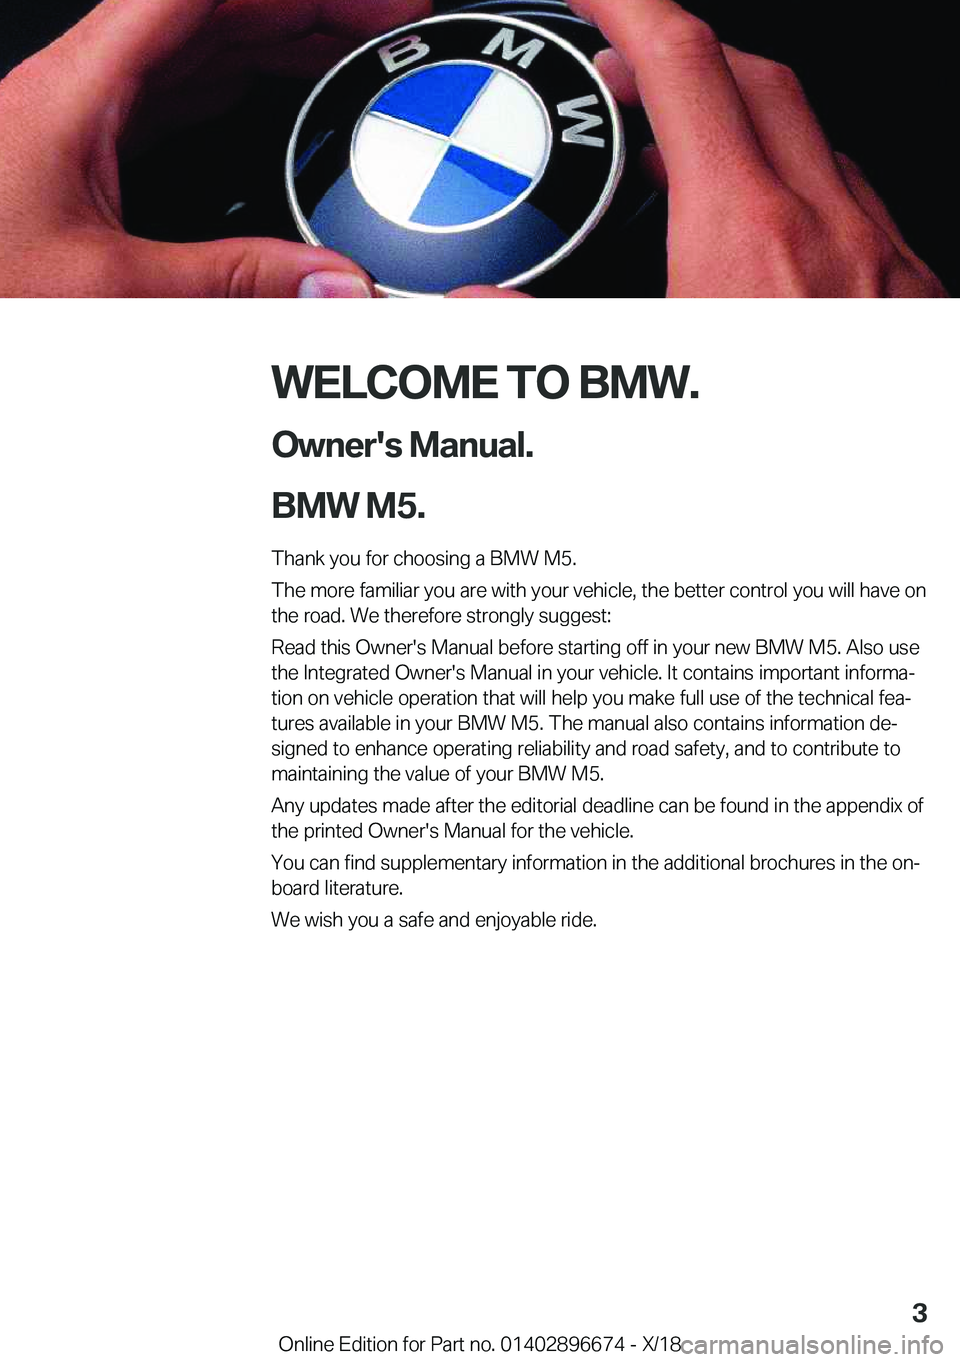 BMW M5 2019  Owners Manual �W�E�L�C�O�M�E��T�O��B�M�W�.�O�w�n�e�r�'�s��M�a�n�u�a�l�.
�B�M�W��M�5�.
�T�h�a�n�k��y�o�u��f�o�r��c�h�o�o�s�i�n�g��a��B�M�W��M�5�.
�T�h�e��m�o�r�e��f�a�m�i�l�i�a�r��y�o�u��a�r�e��w�